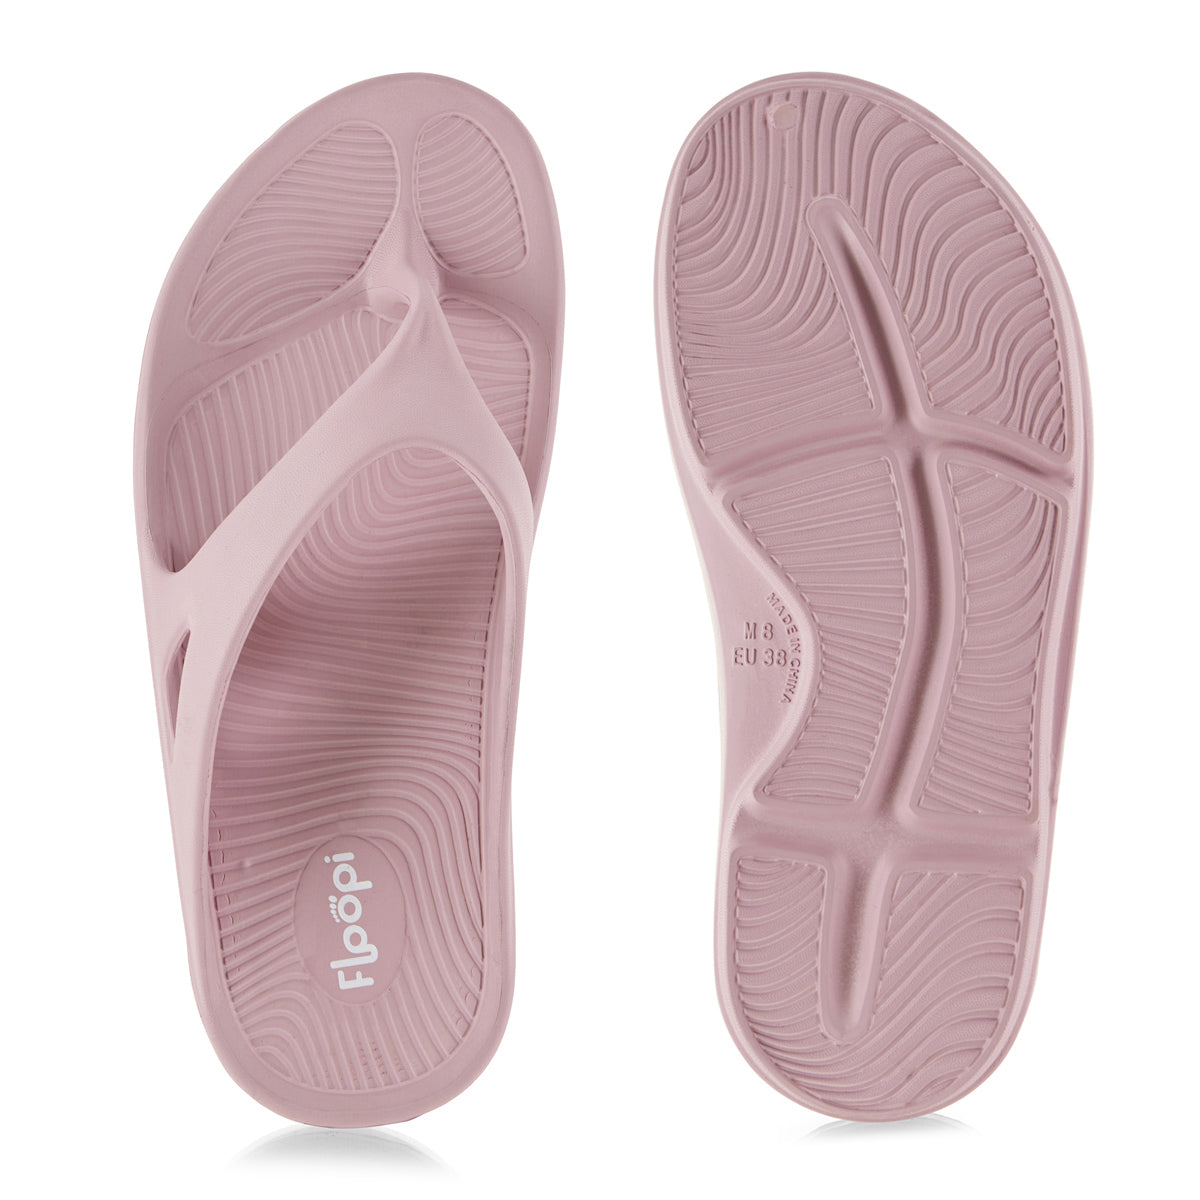 Floopi | Womens Blair Comfort Thong Sandal - Lavender